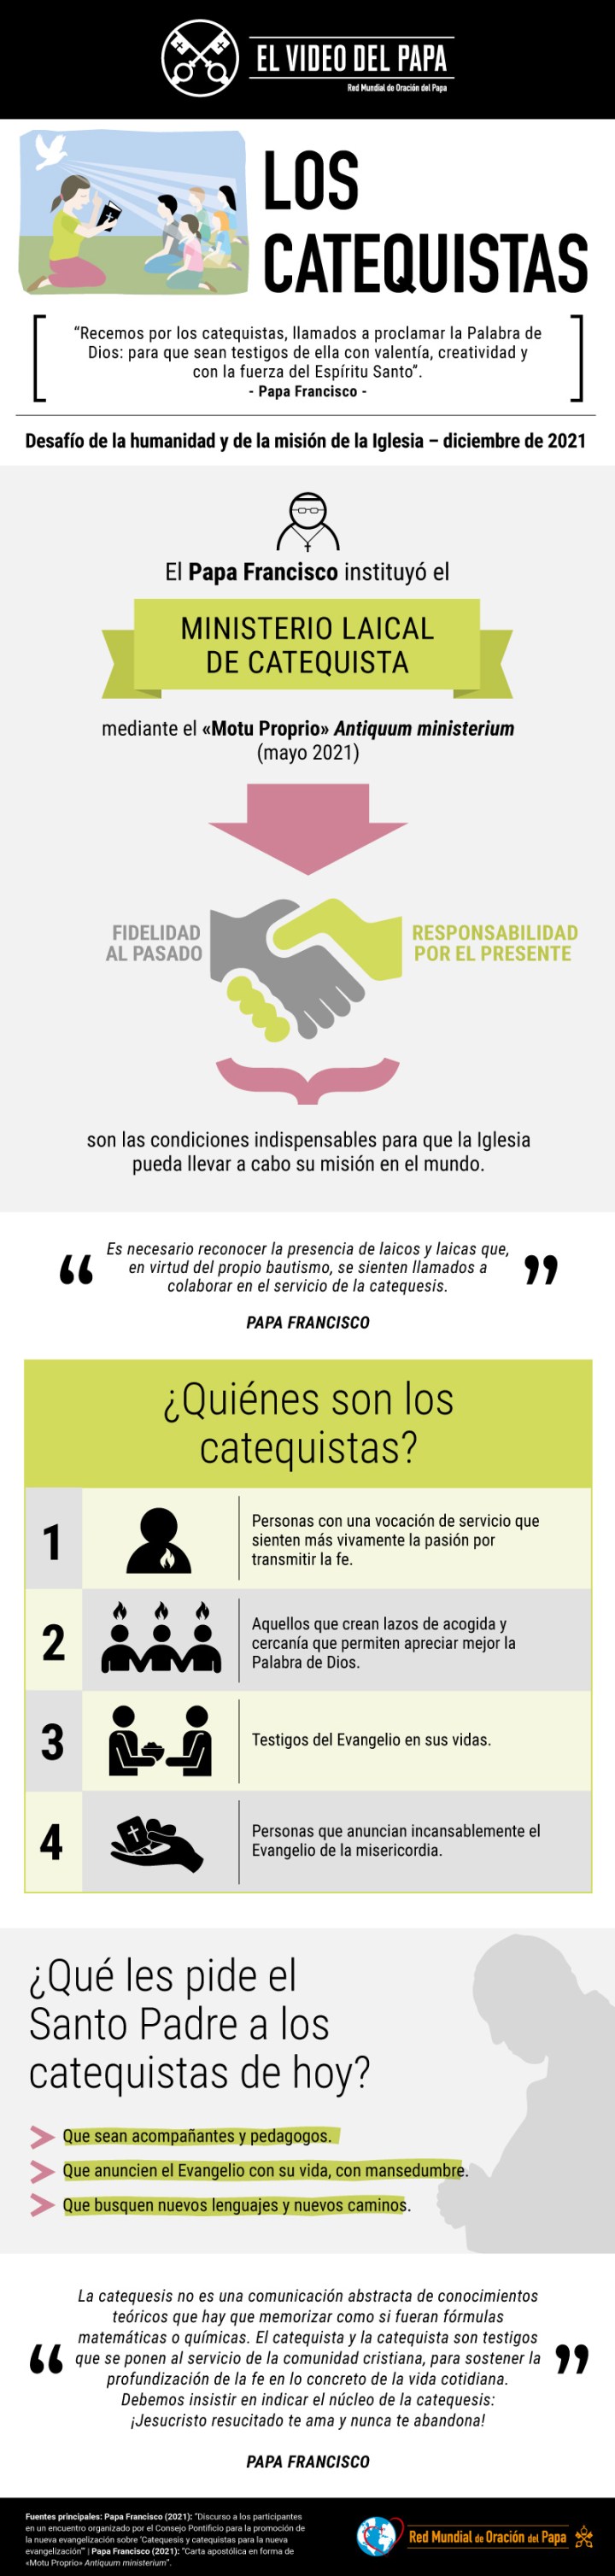 Infographic-TPV-12-2021-ES-Los-catequistas.jpg